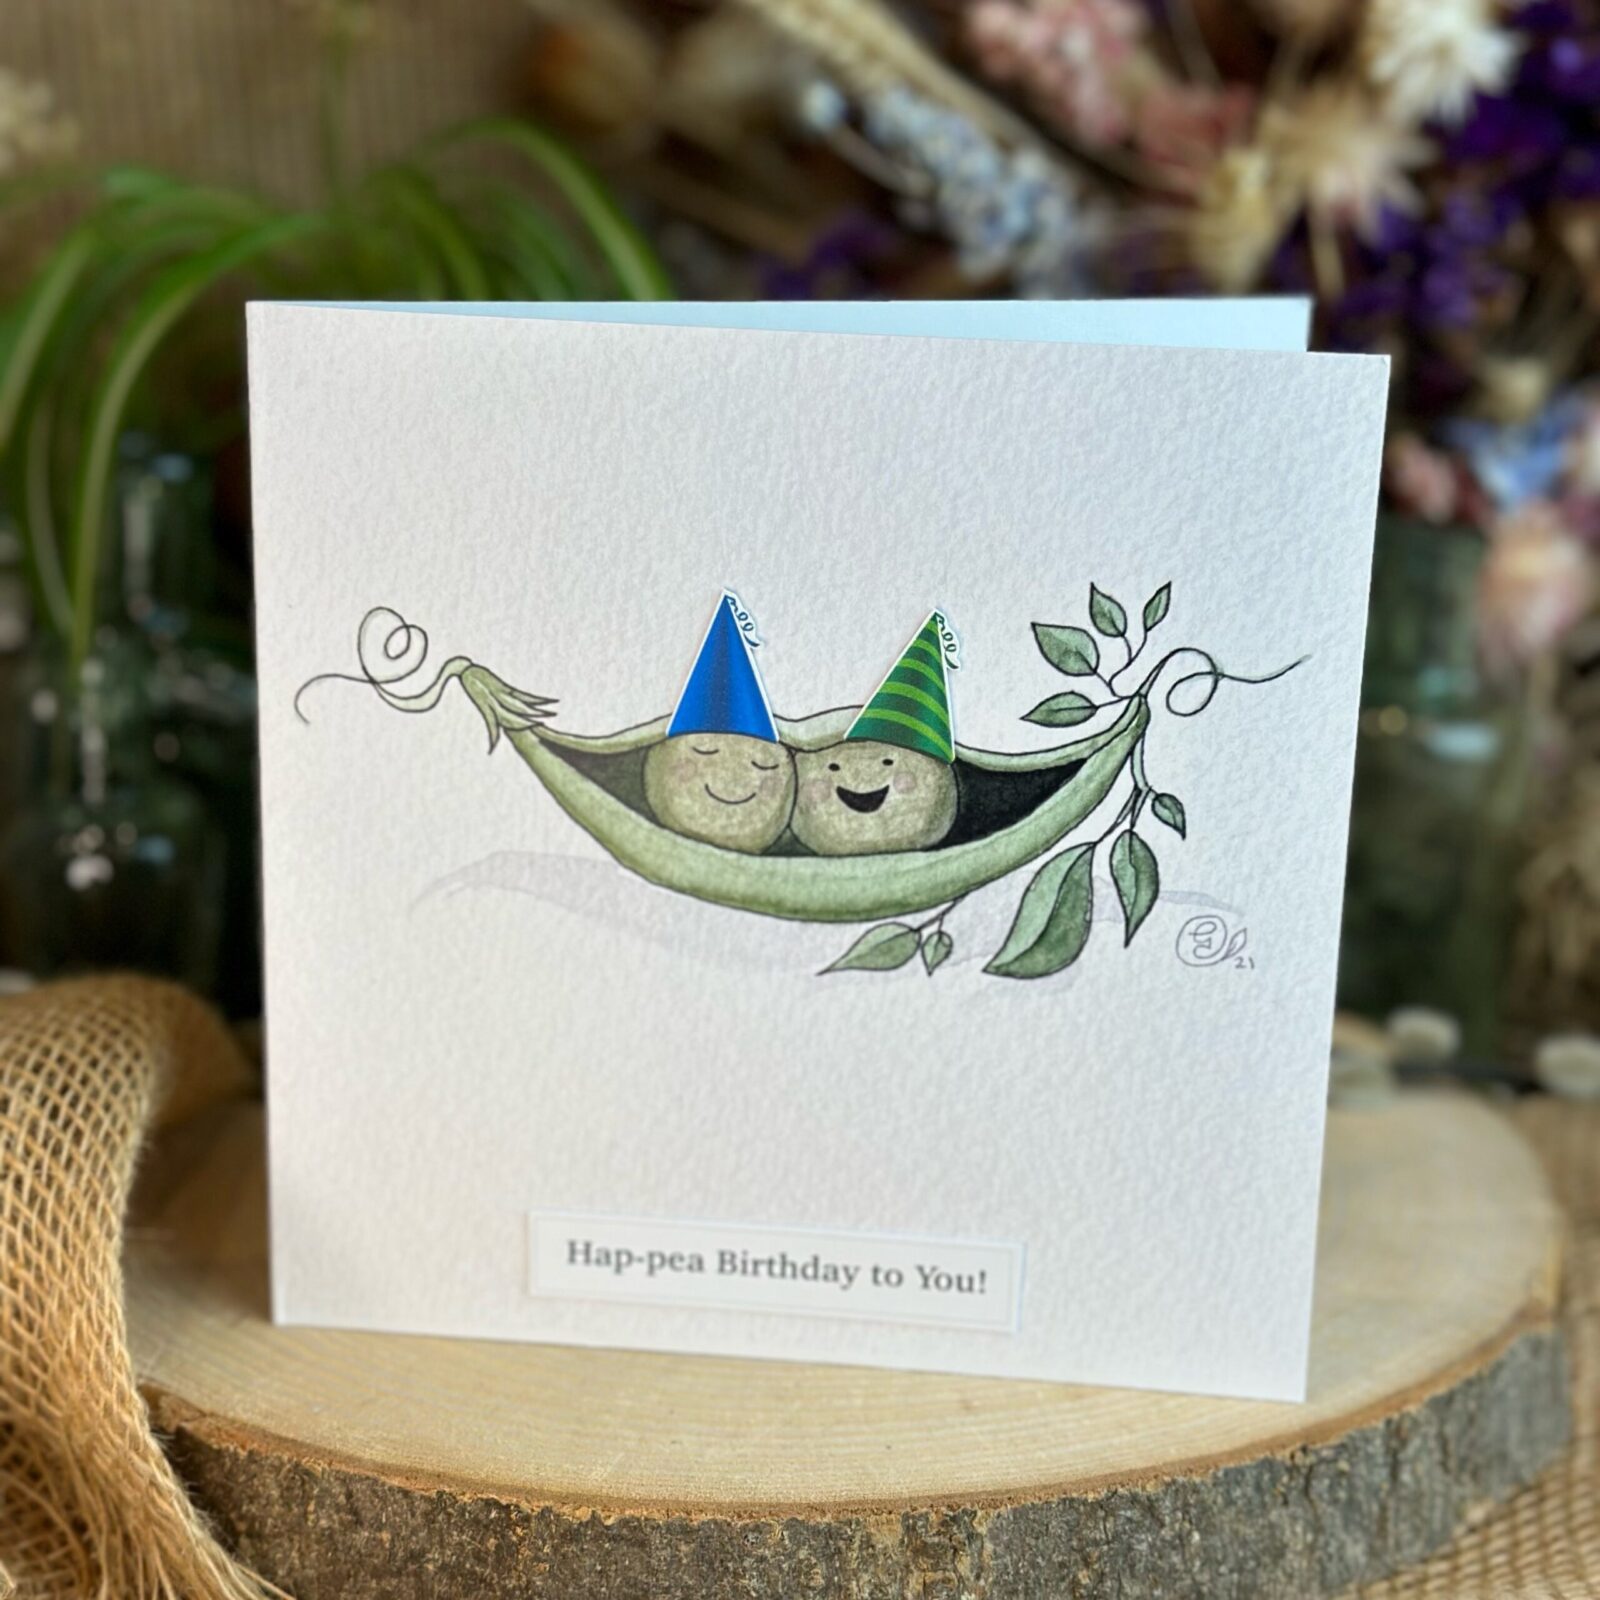 Hap-pea blue hat birthday card